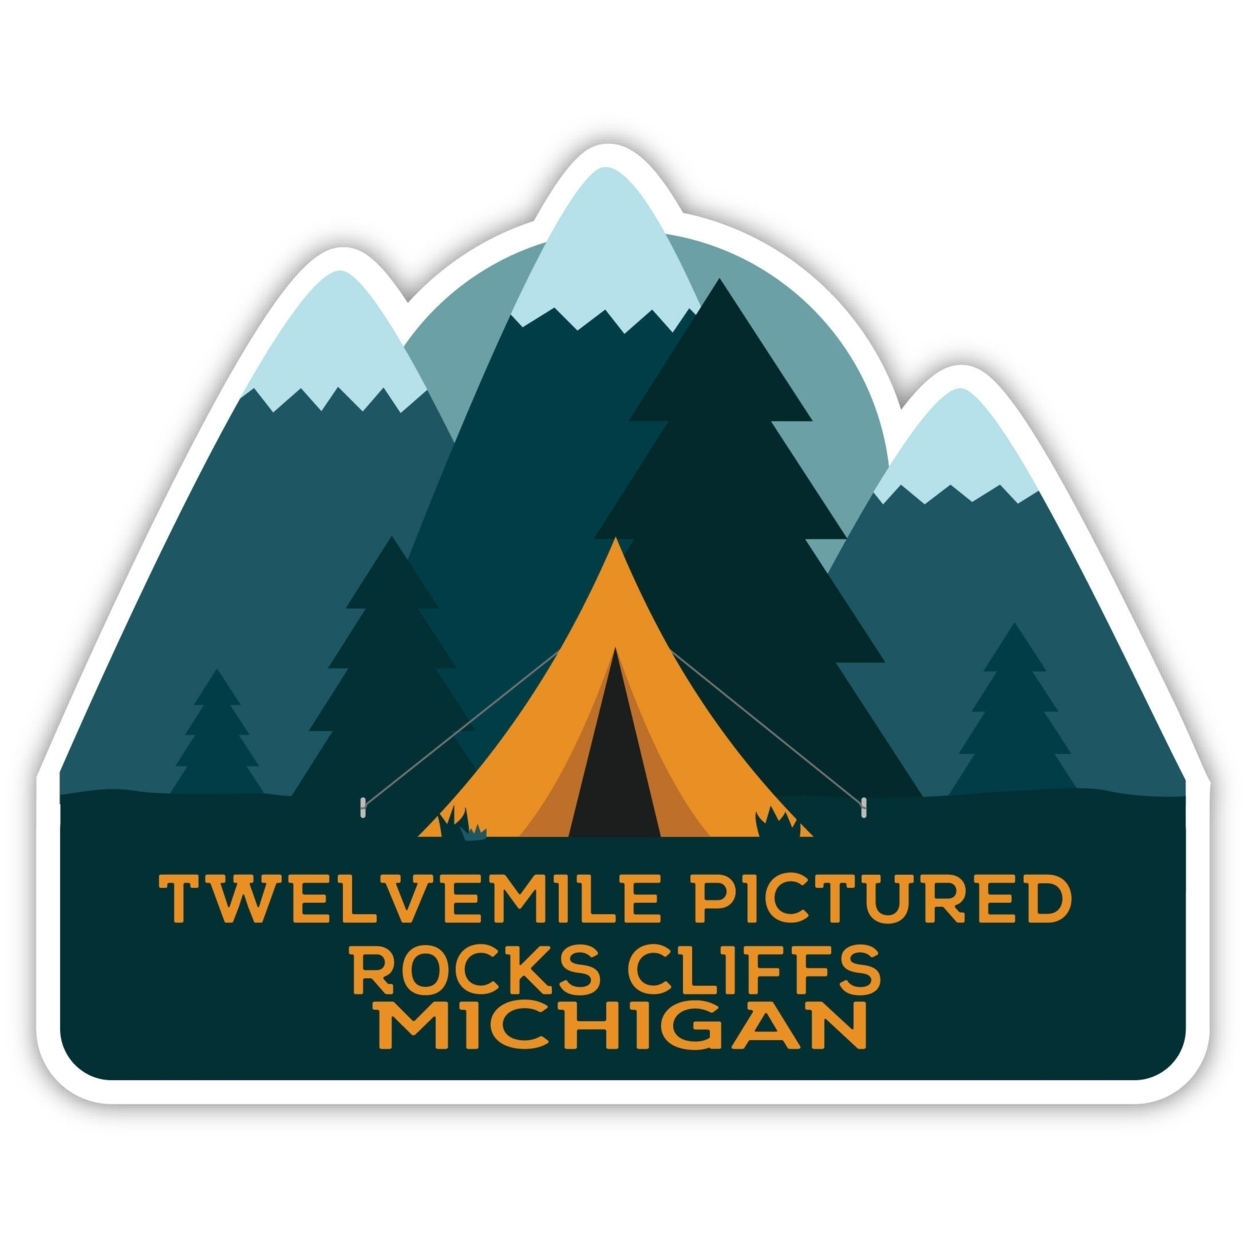 Twelvemile Pictured Rocks Cliffs Michigan Souvenir Decorative Stickers (Choose Theme And Size) - Single Unit, 4-Inch, Tent